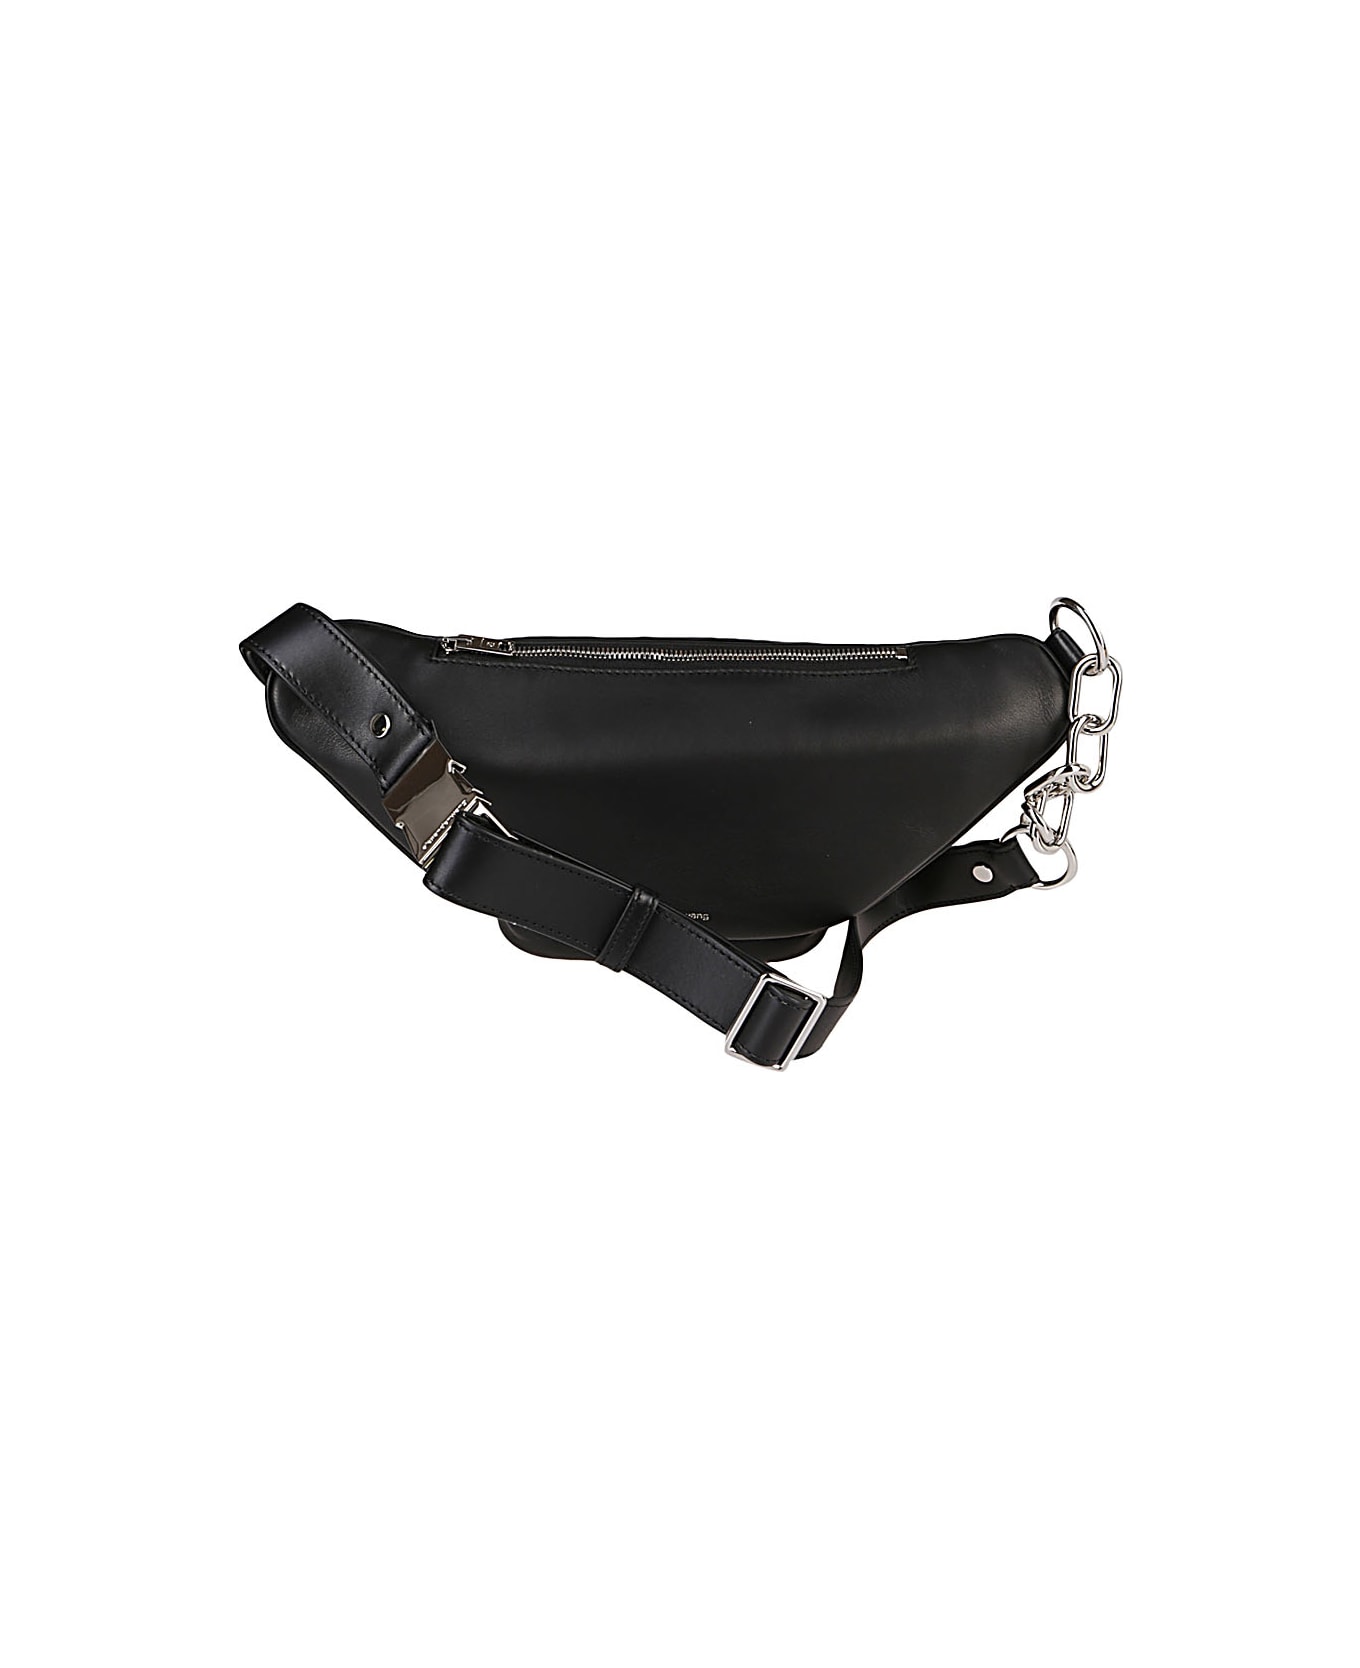 Alexander Wang Black Leather Attica Belt Bag - Black